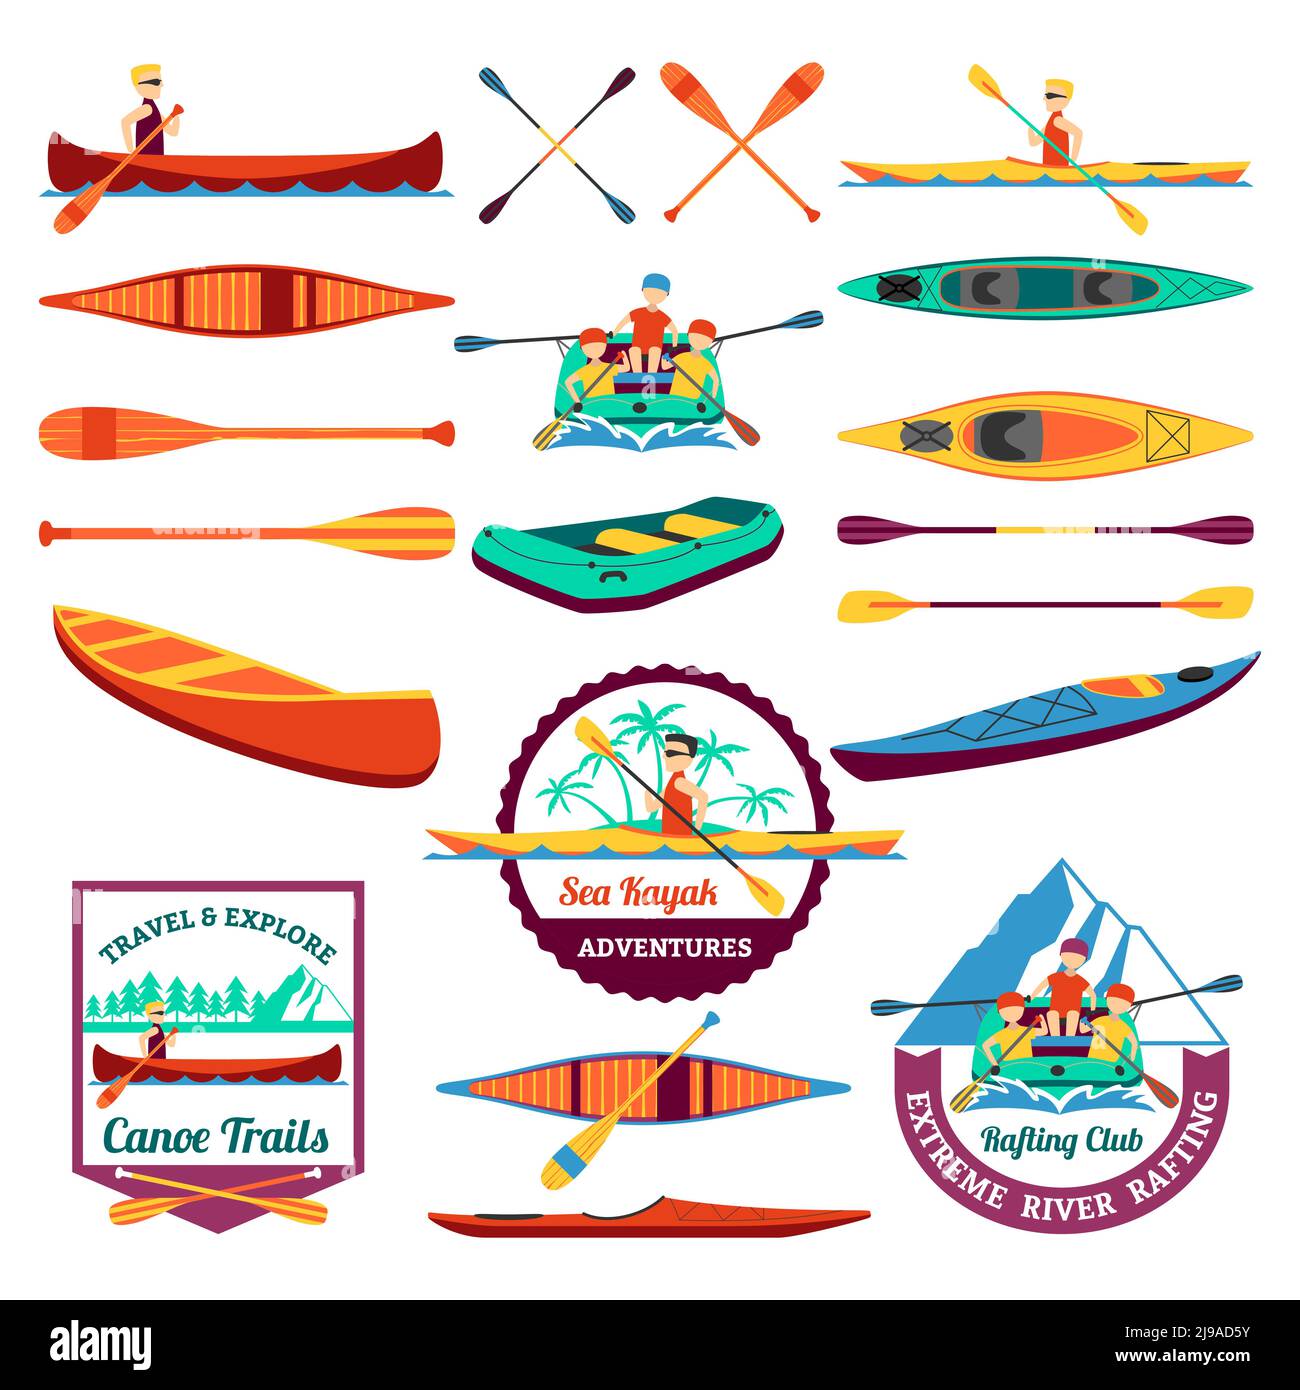 Kanu-Trails und Rafting Club Emblem mit Kajak Ausrüstung Elemente Flache Symbole Komposition abstrakt isoliert Vektor-Illustration Stock Vektor